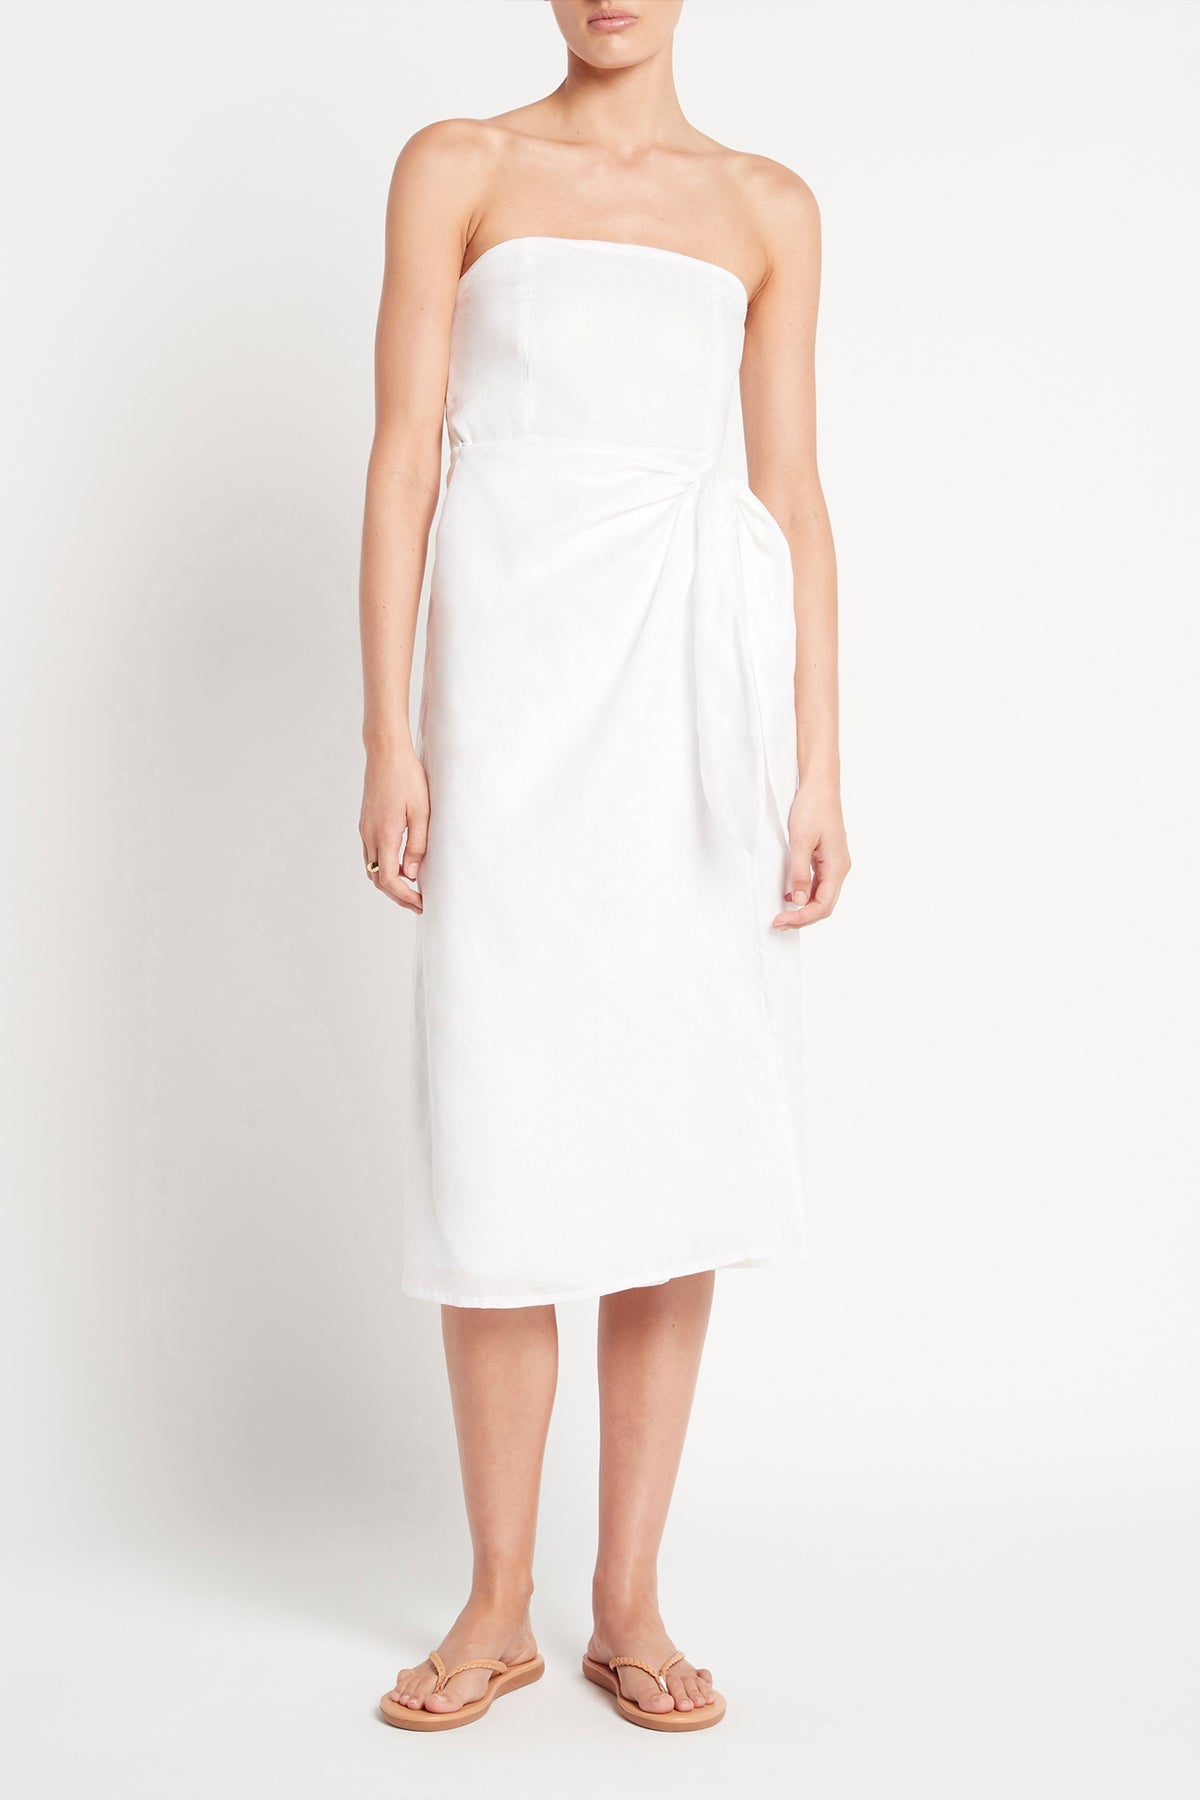 El Mar Midi Dress in White - shop-olivia.com